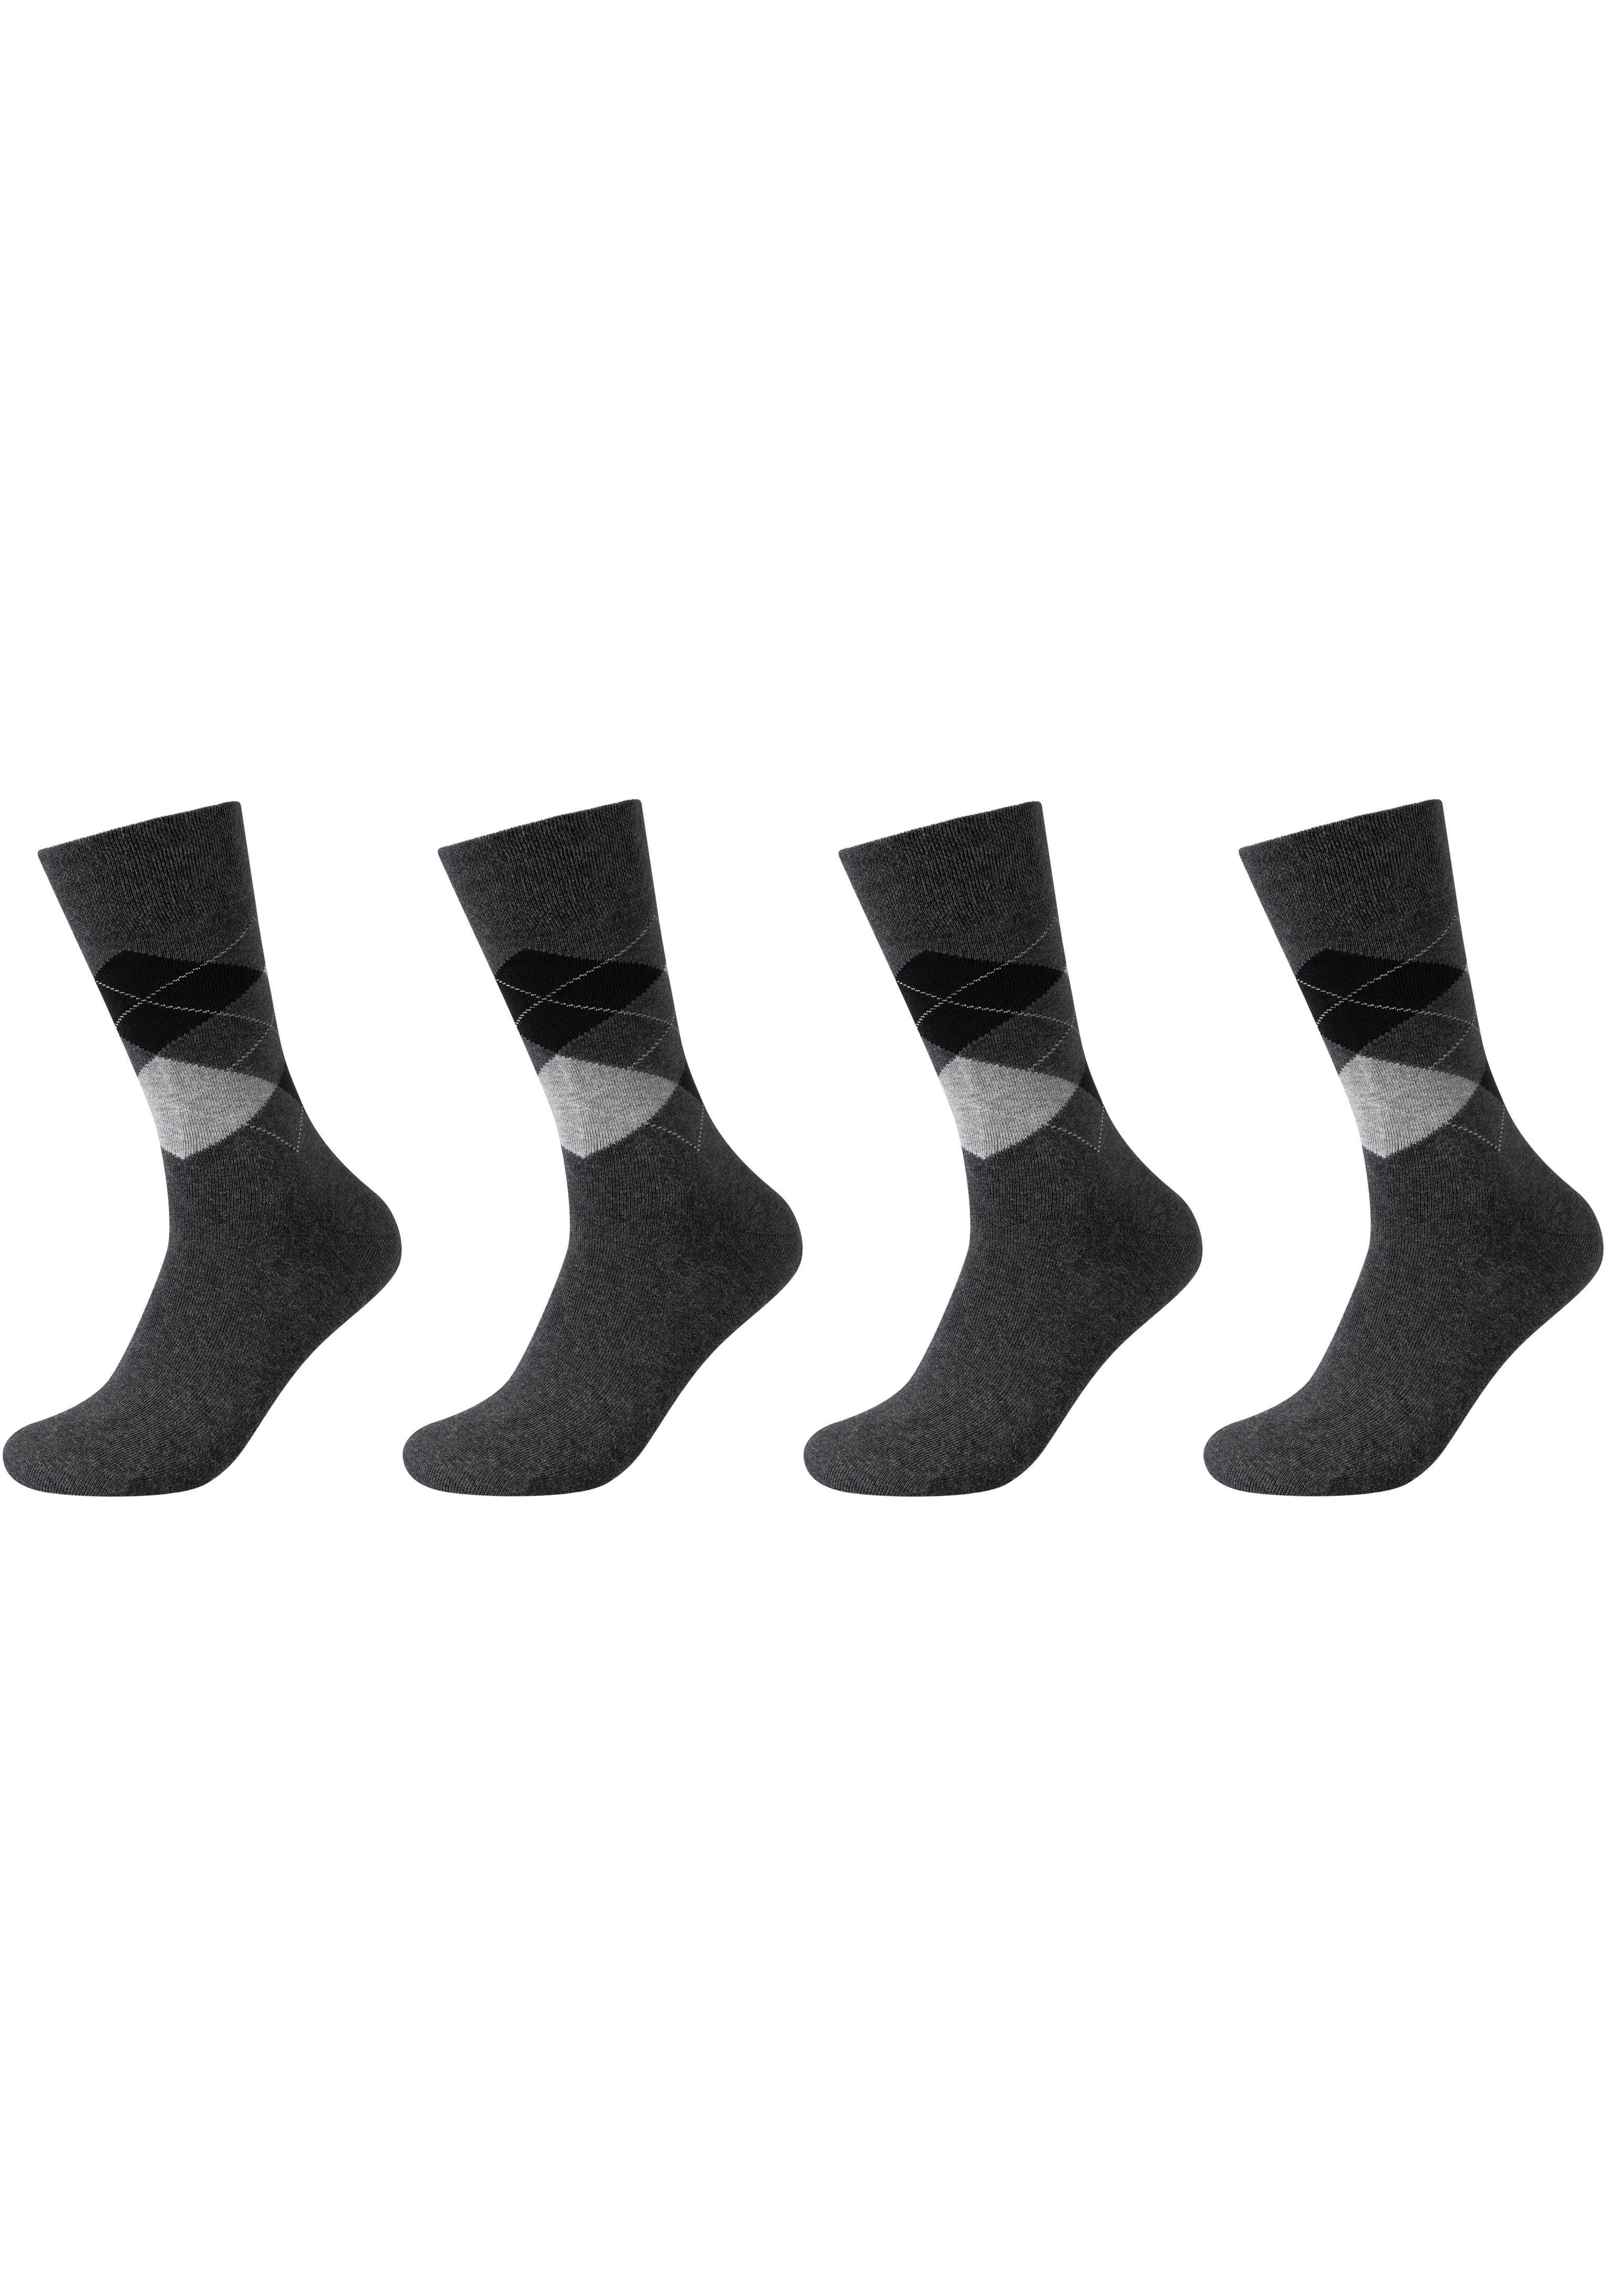 Camano Socken (Packung, Faltenfreier Tragekomfort anthrazit Elasthan-Anteil dank 4-Paar)